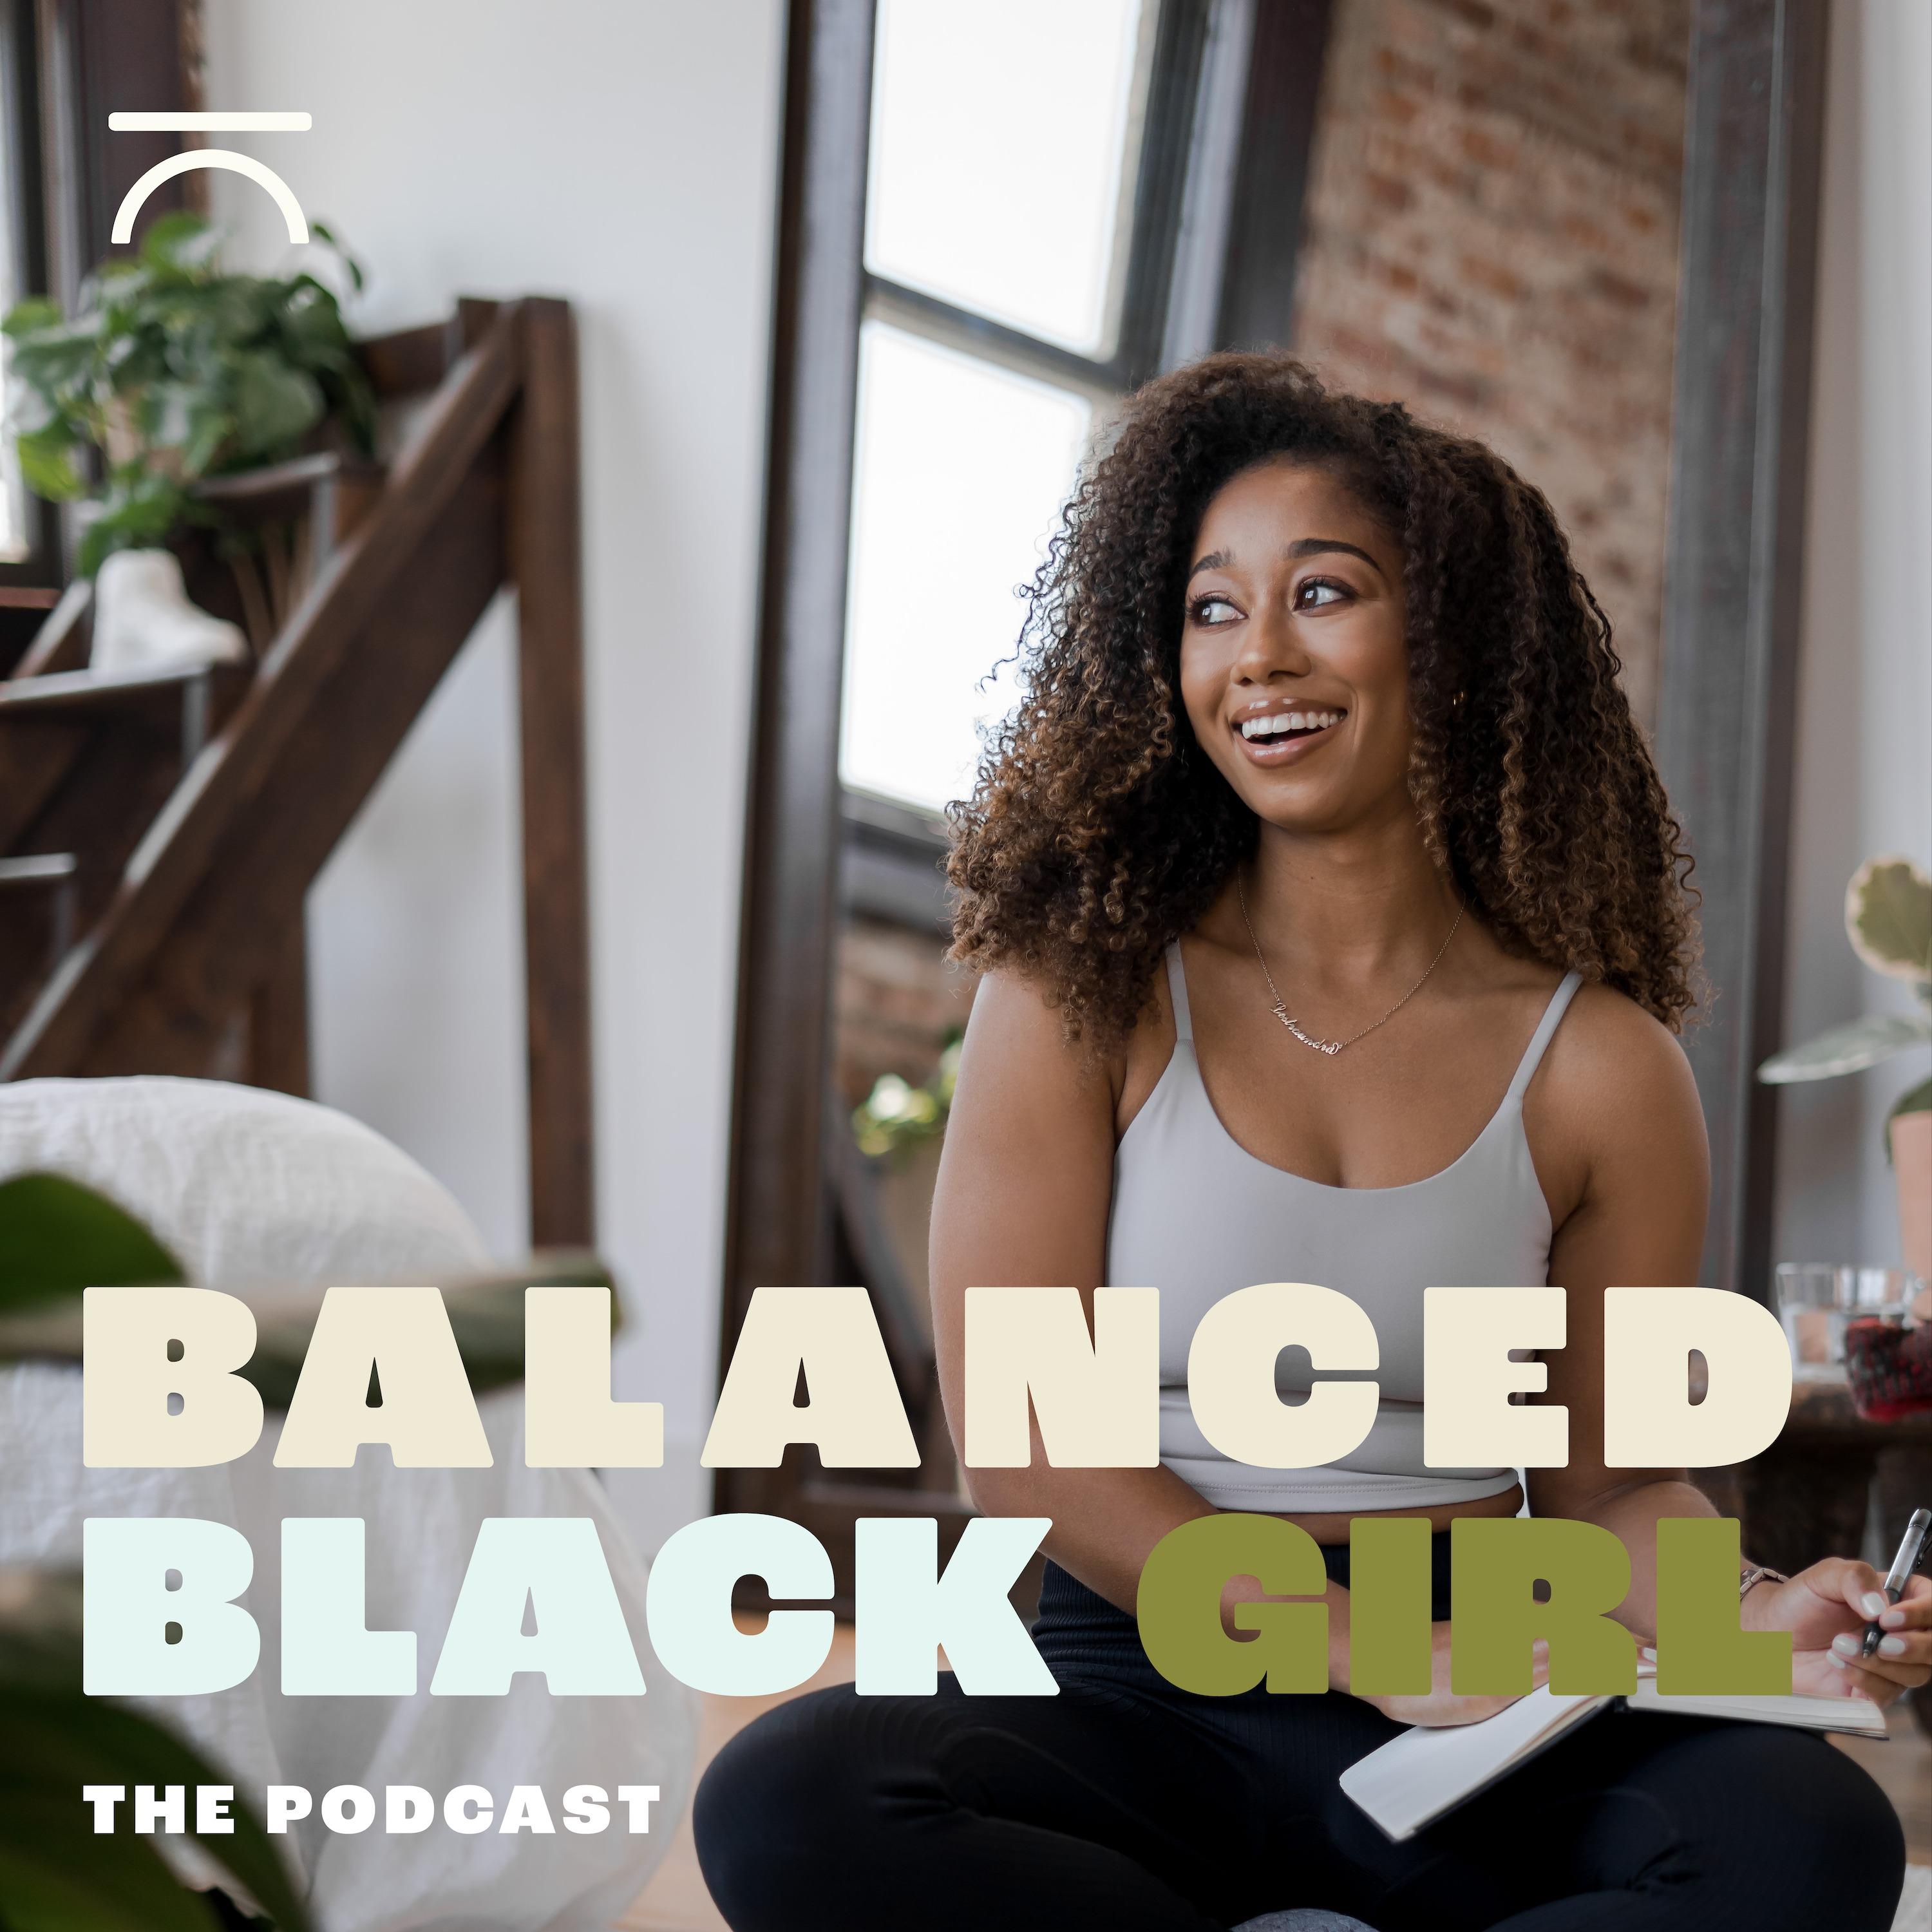 Balanced Black Girl